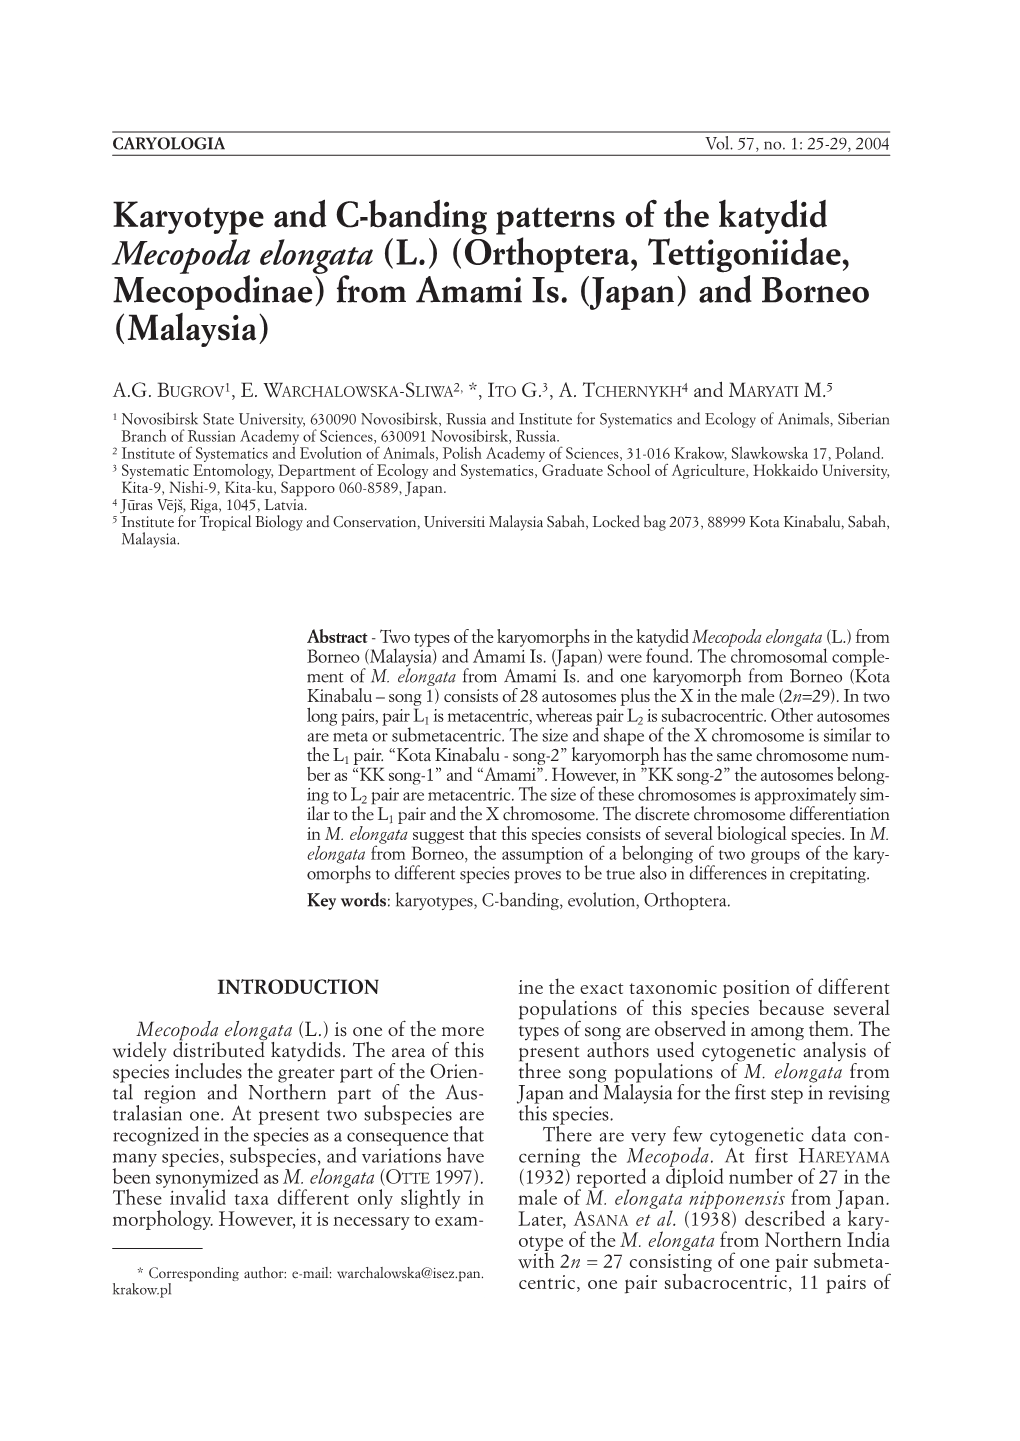 Karyotype and C-Banding Patterns of the Katydid Mecopoda Elongata (L.) (Orthoptera, Tettigoniidae, Mecopodinae) from Amami Is